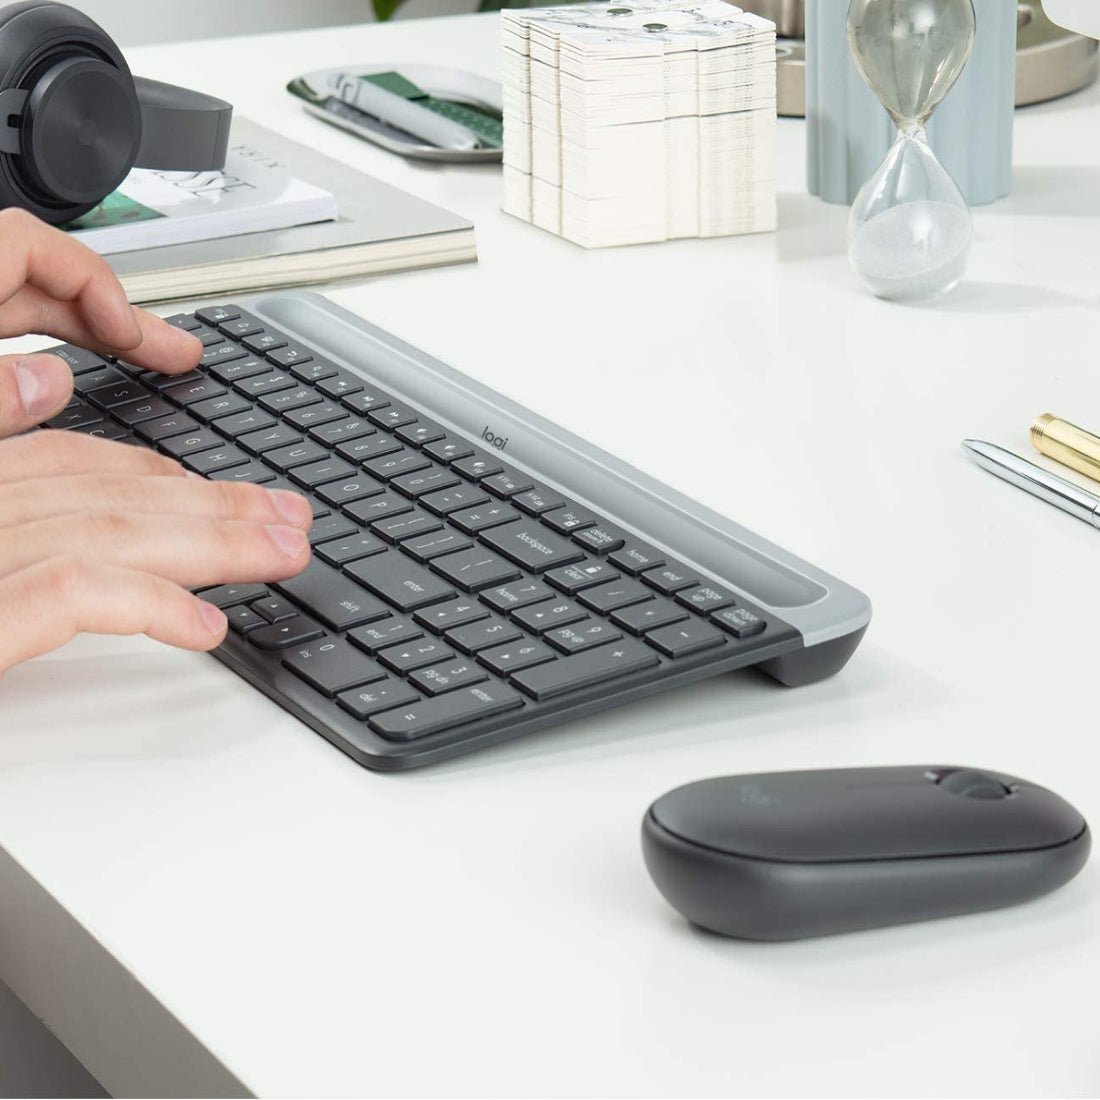 Logitech Slim Wireless Keyboard And Mouse Combo MK470 - Graphite - لوحة مفاتيح و فأرة - Store 974 | ستور ٩٧٤